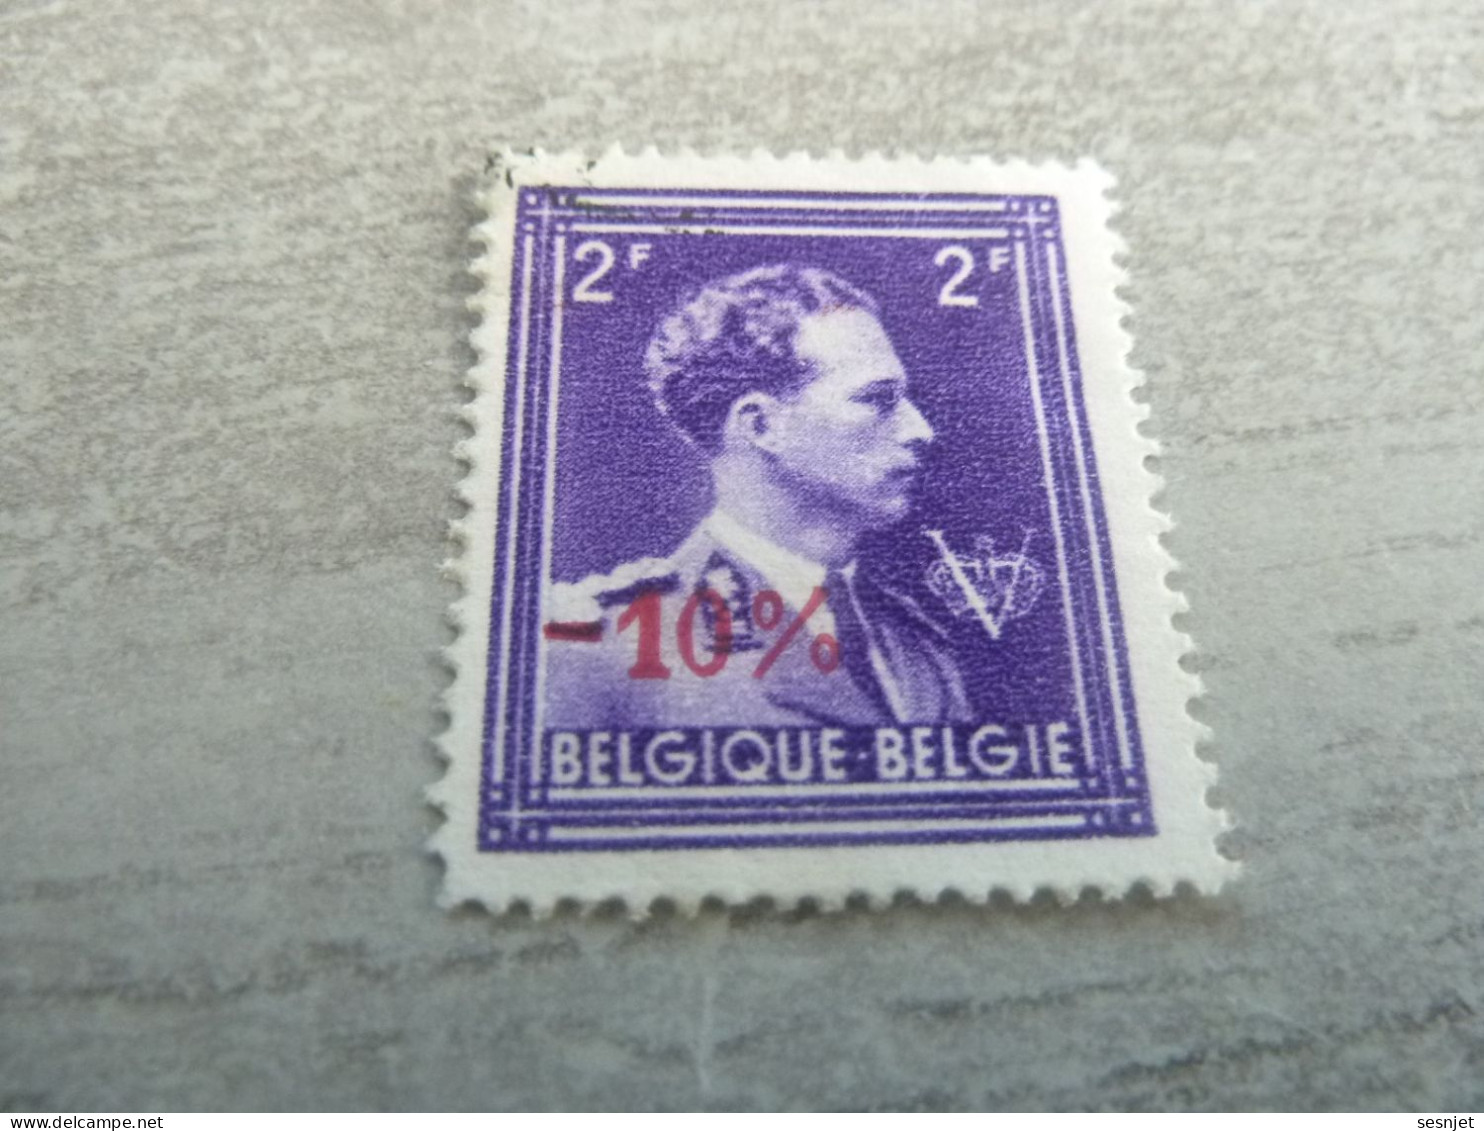 Belgique - Albert 1 - Val  2f. - Surcharge Rouge 10 % - Violet - Oblitéré - Année 1950 - - Gebruikt